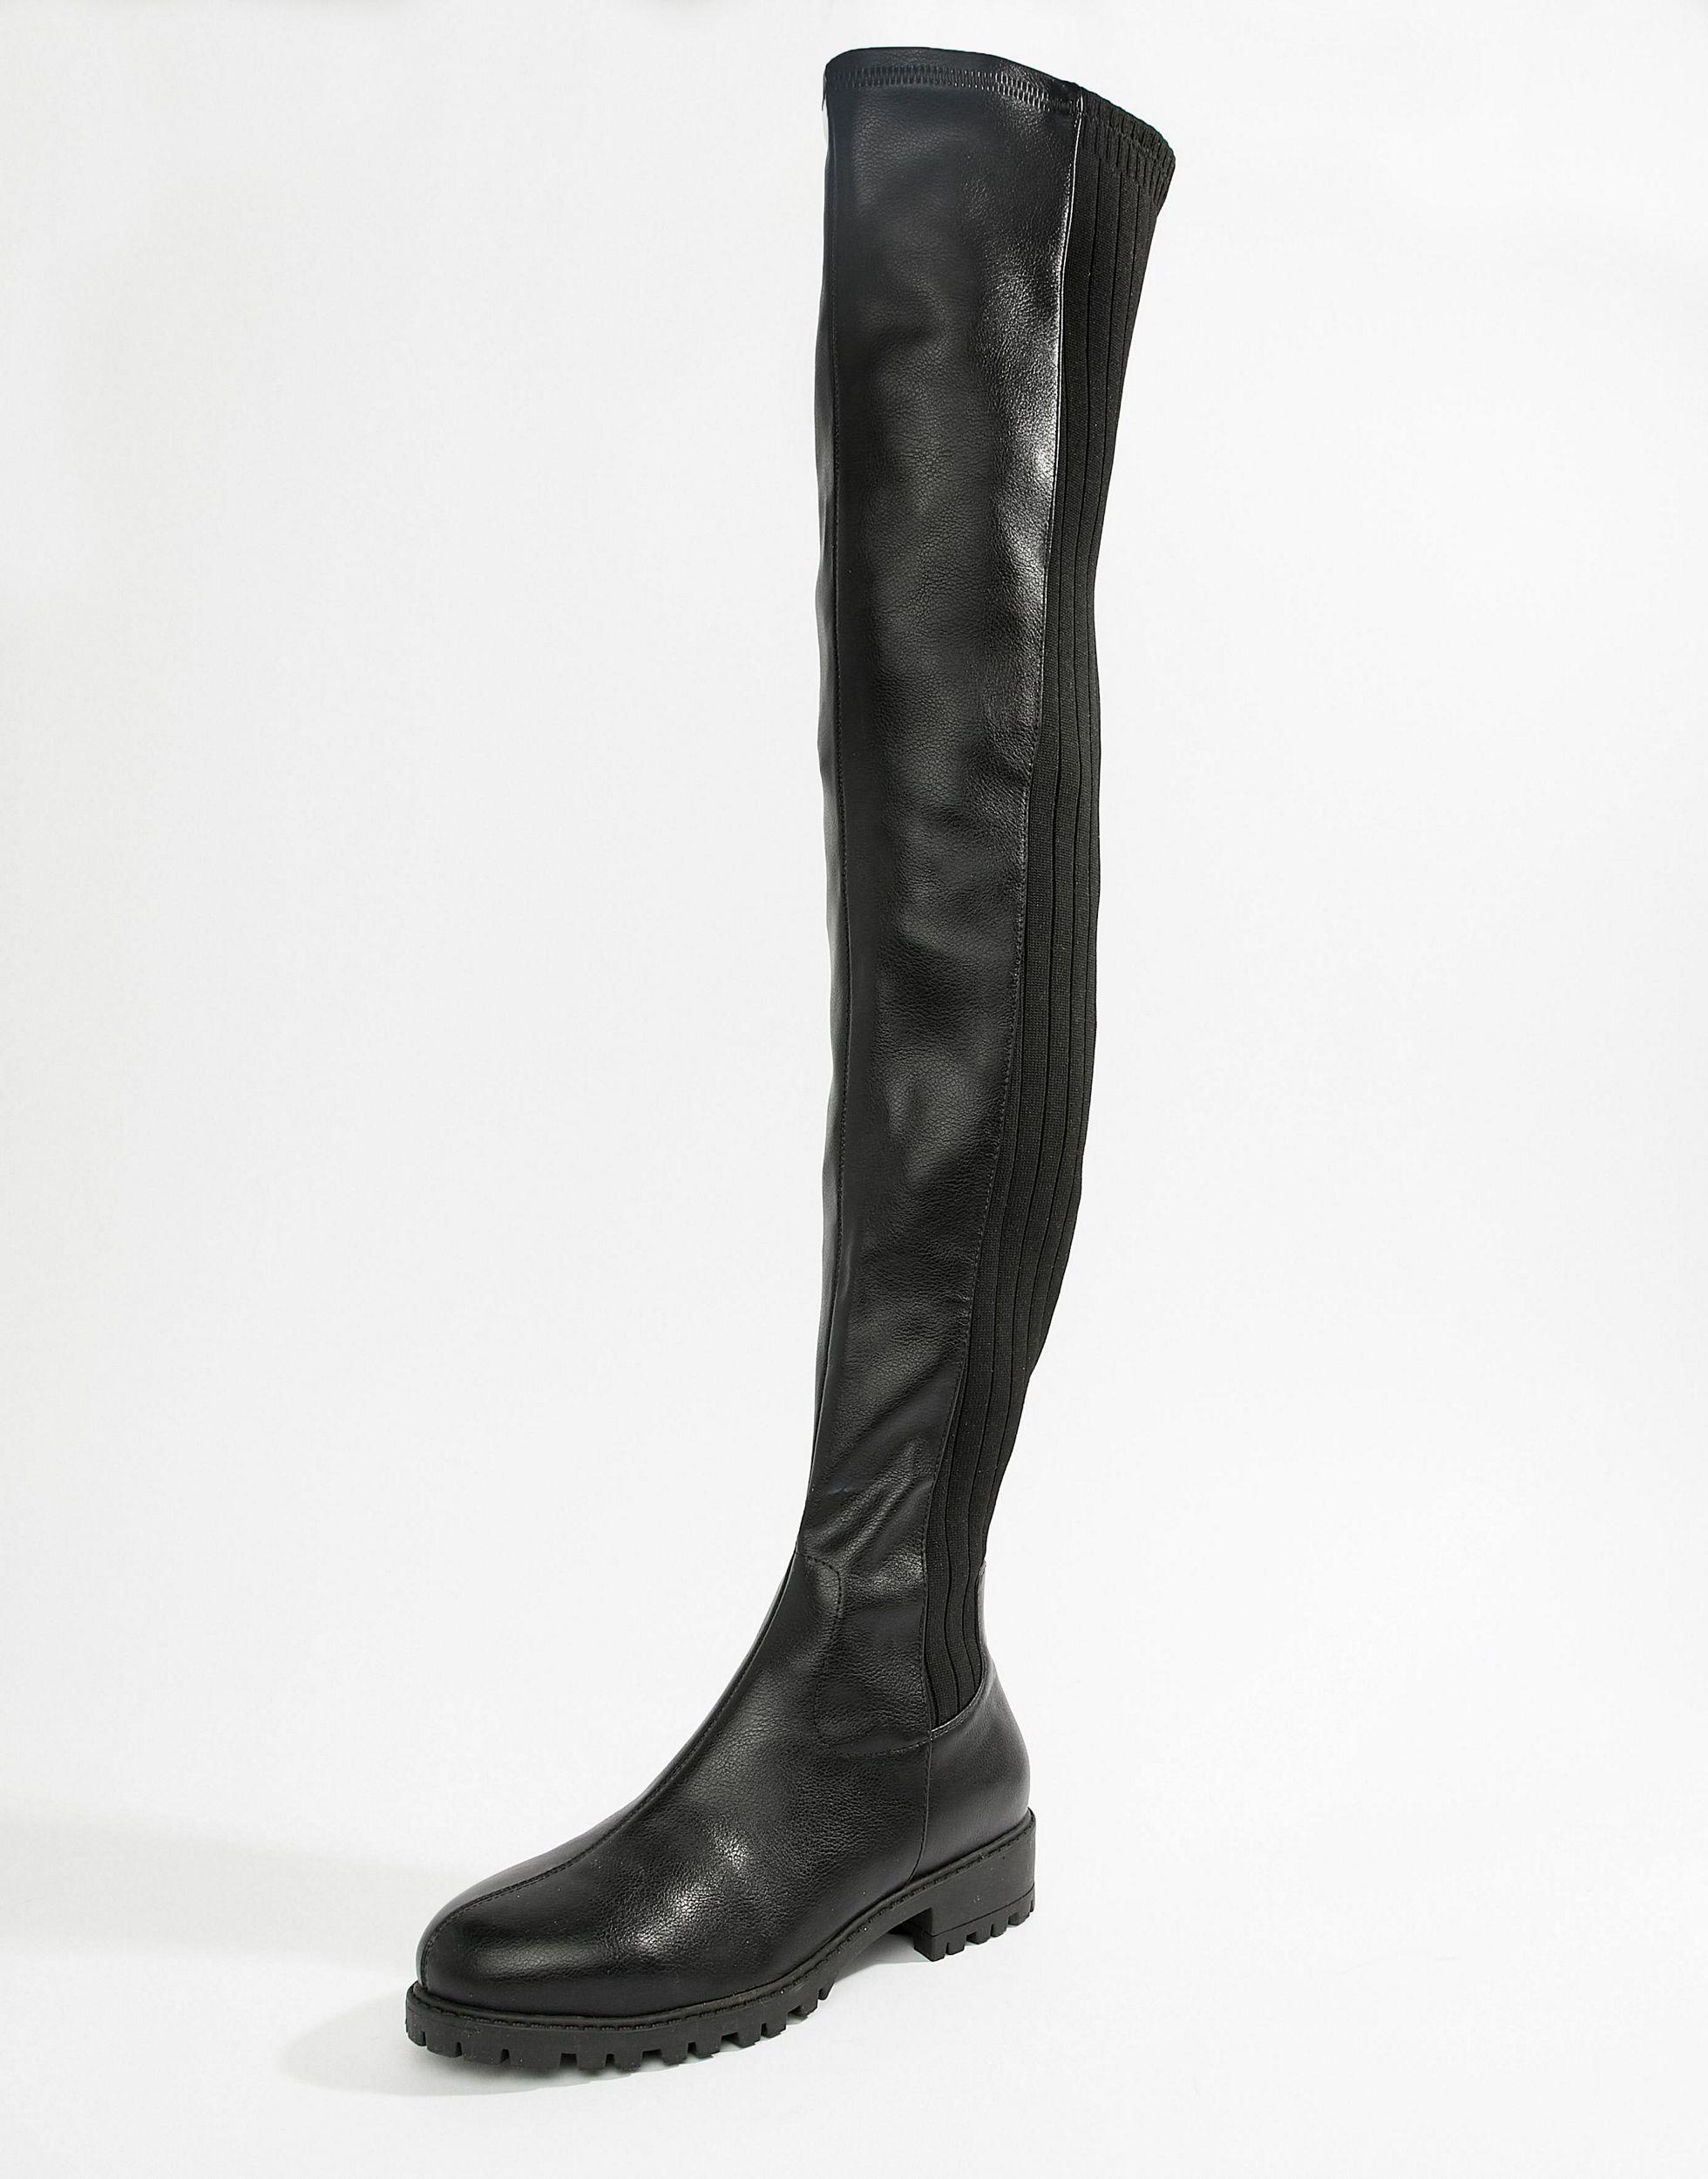 ASOS Denim Krista Chunky Thigh High Boots in Black - Lyst